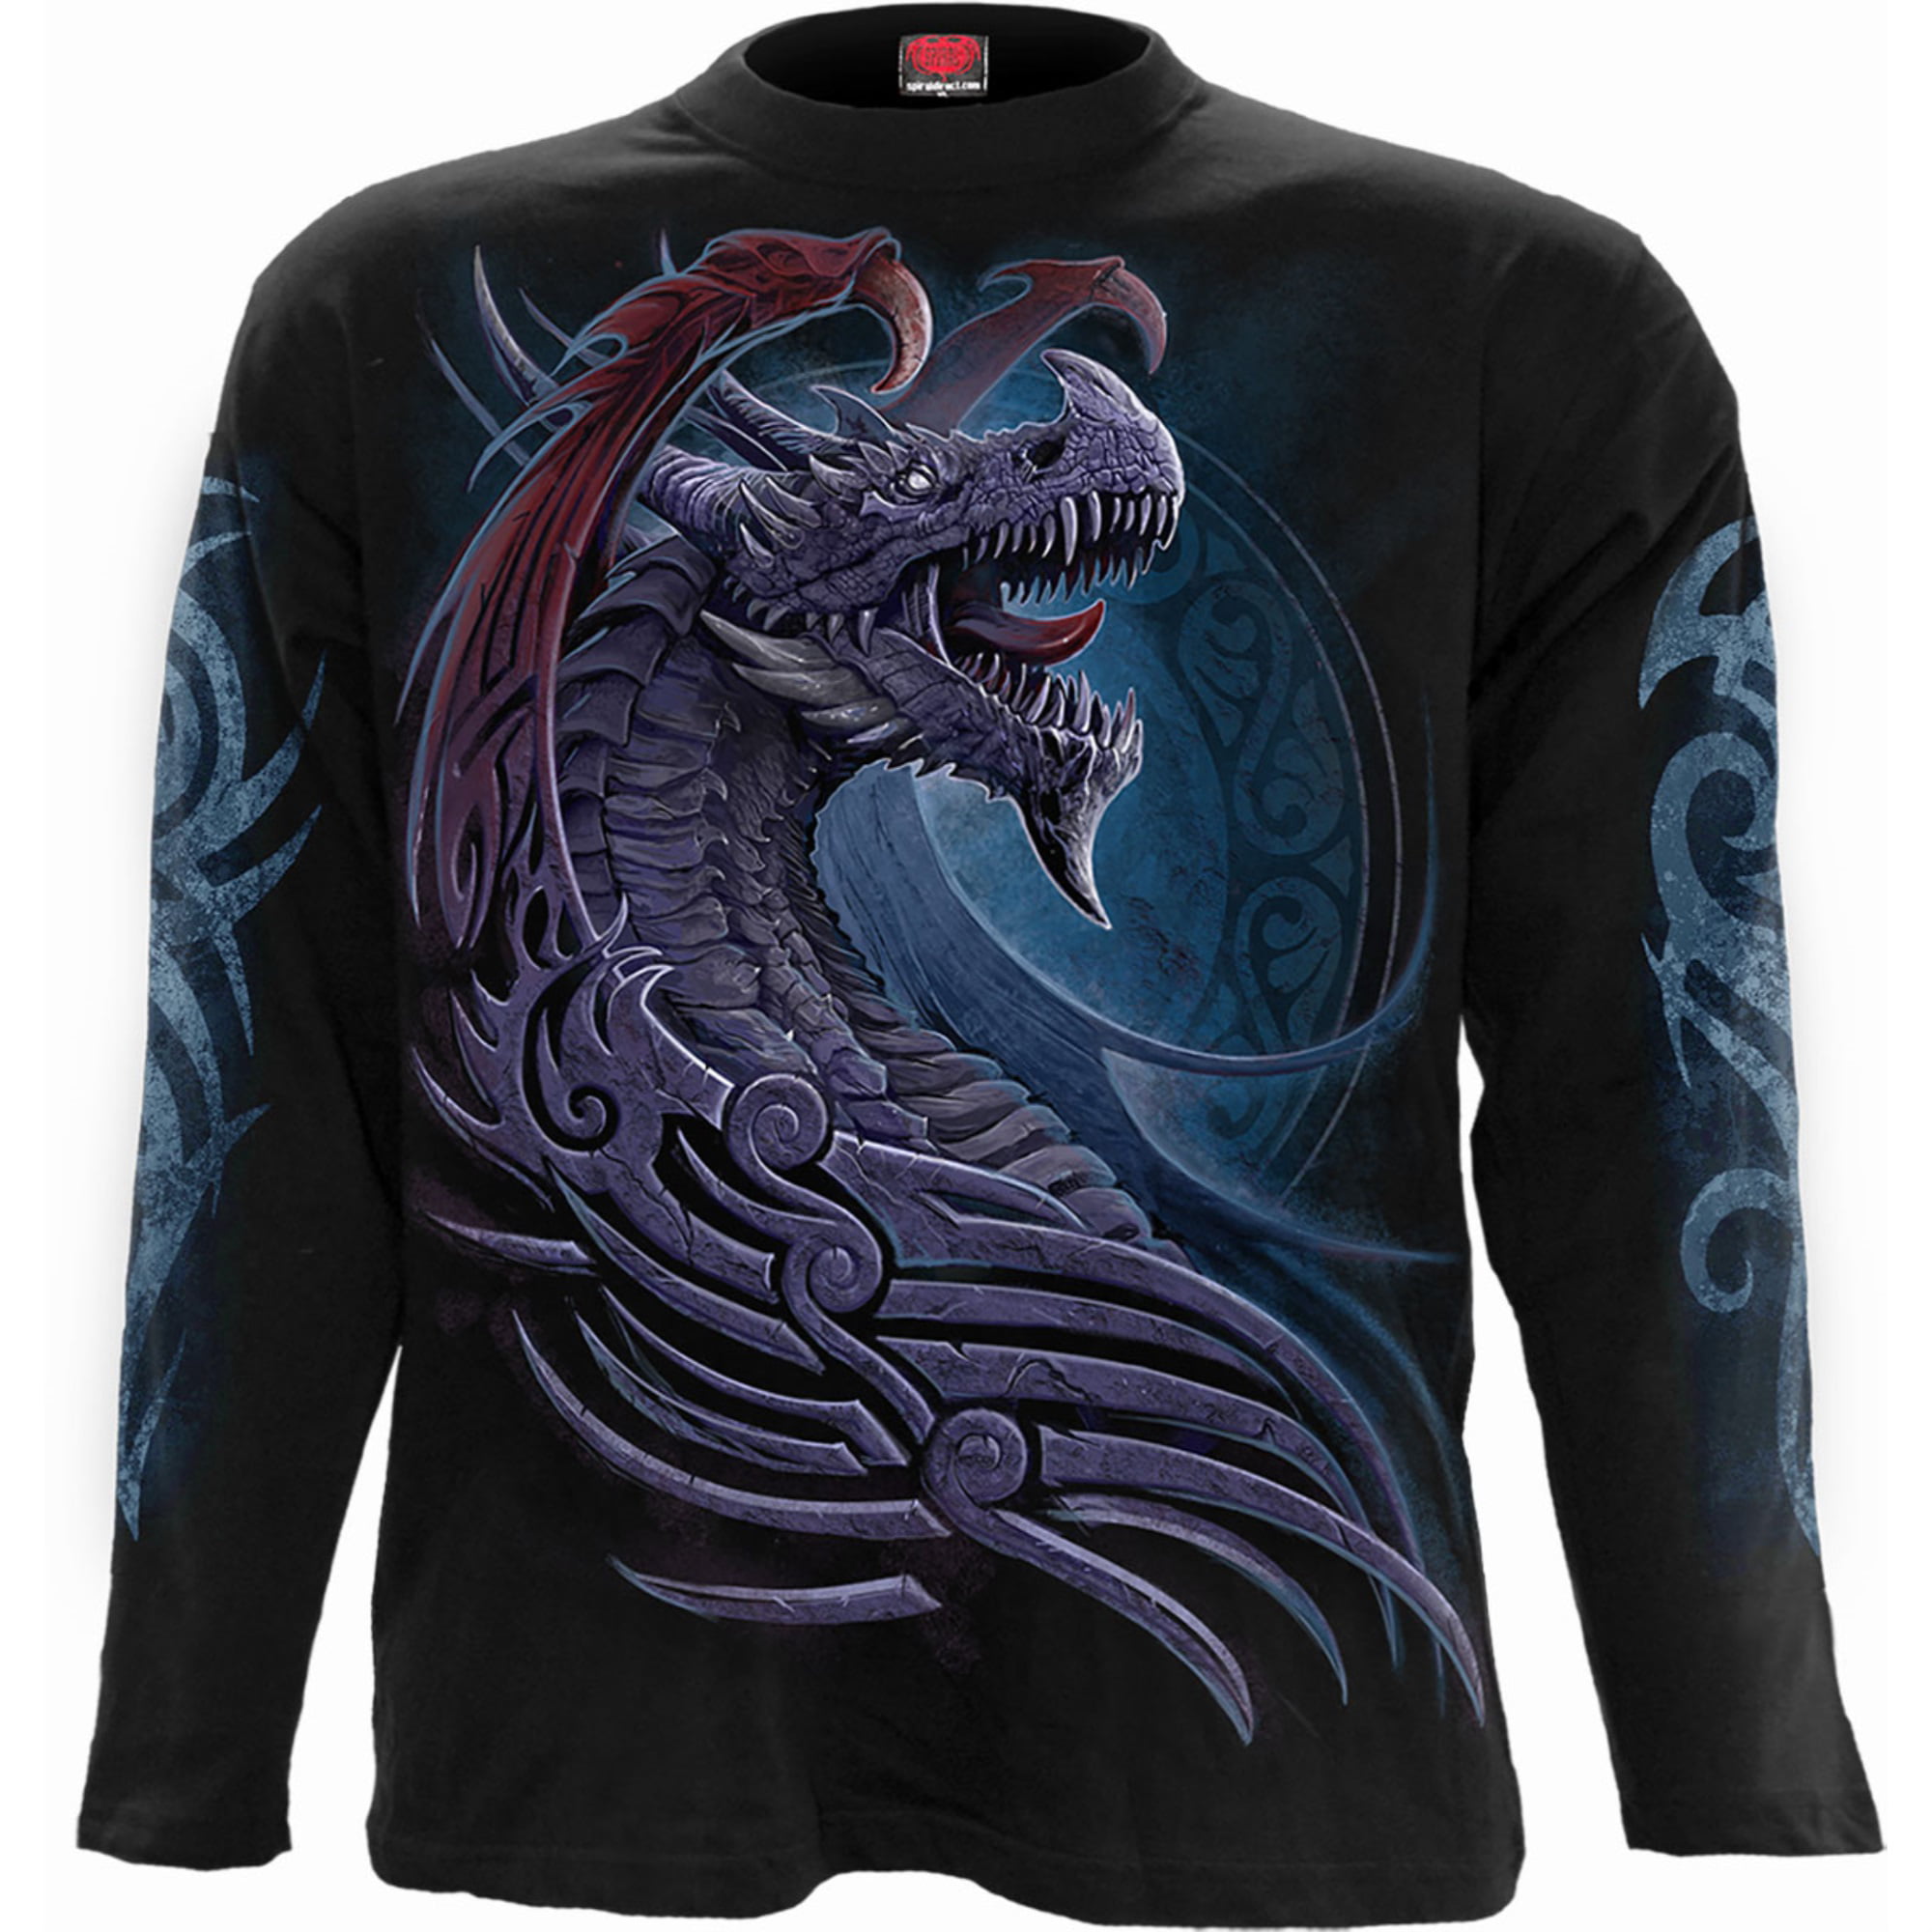 Spiral - DRAGON BORNE - Longsleeve T-Shirt Black - XL - Walmart.com